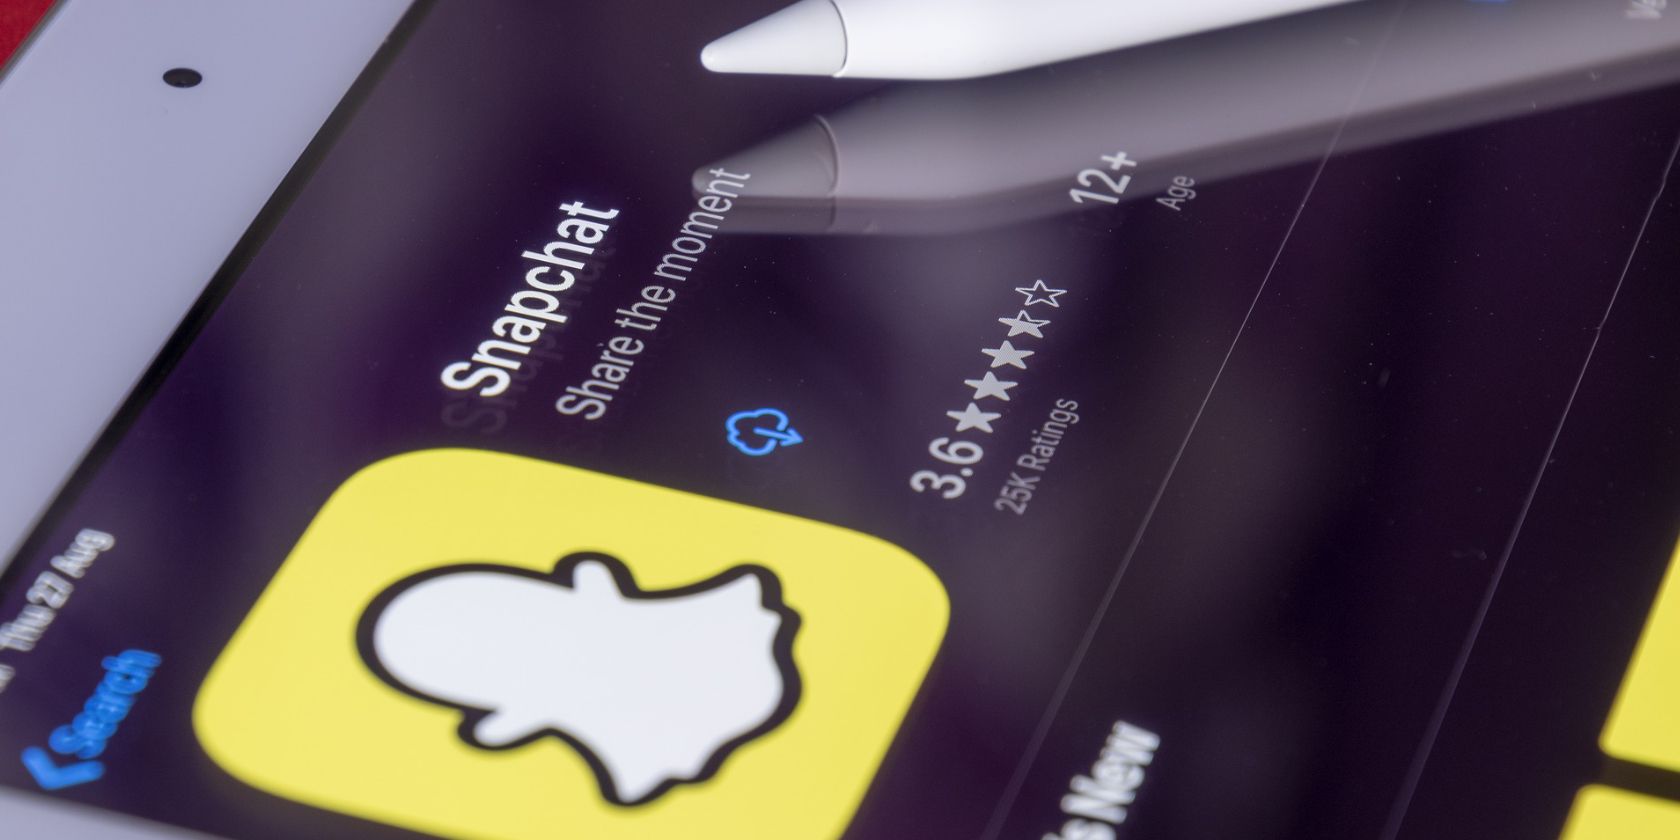 Service snapchat of 2022 terms new Snapchat clarifies